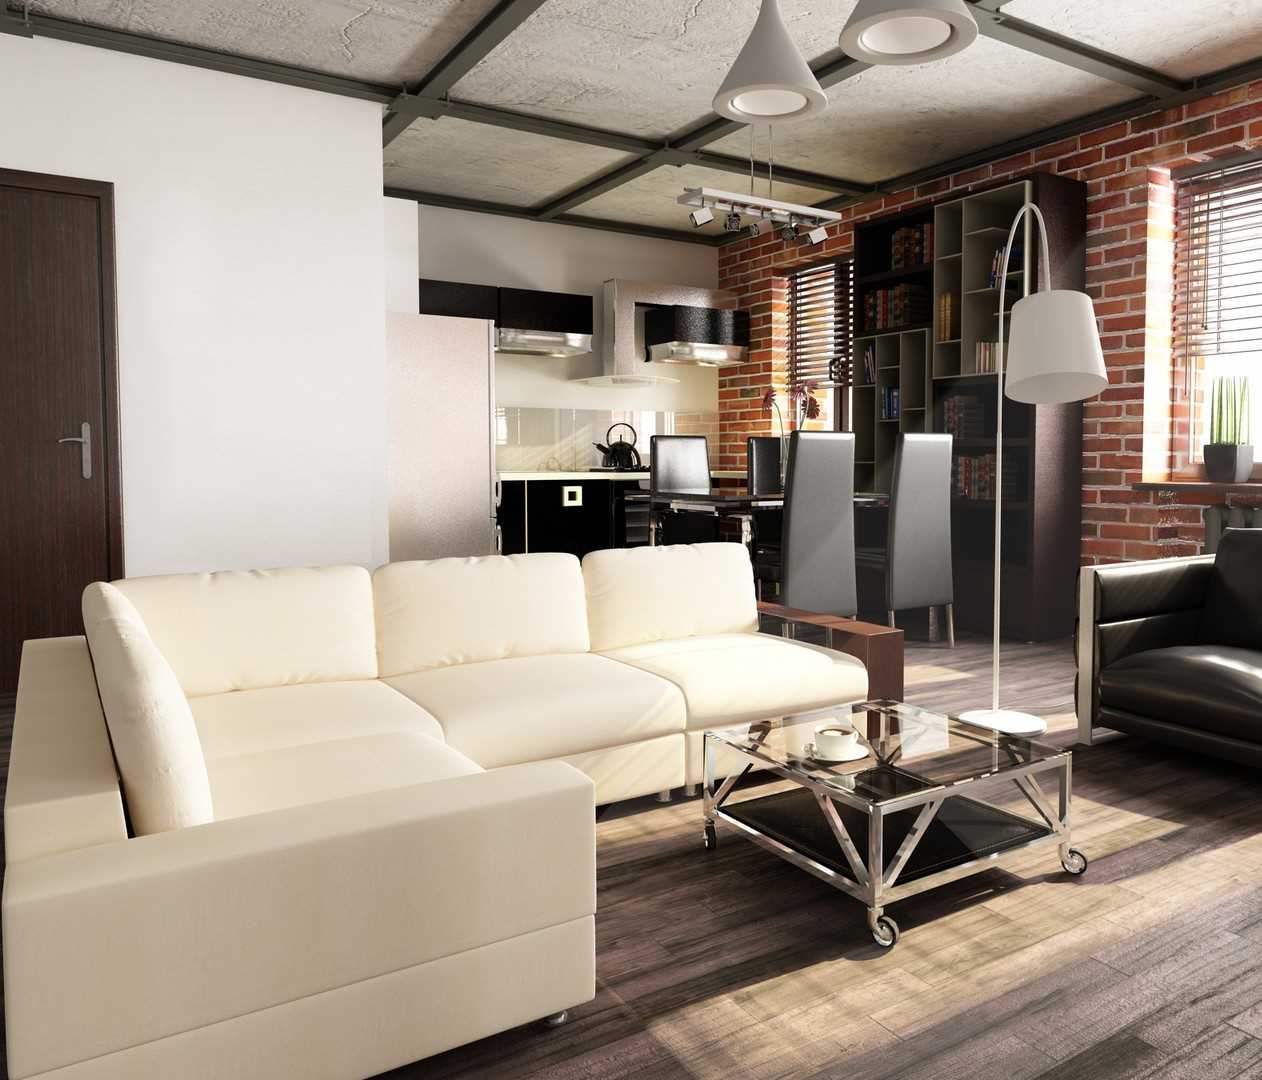 variant of a beautiful apartment interior